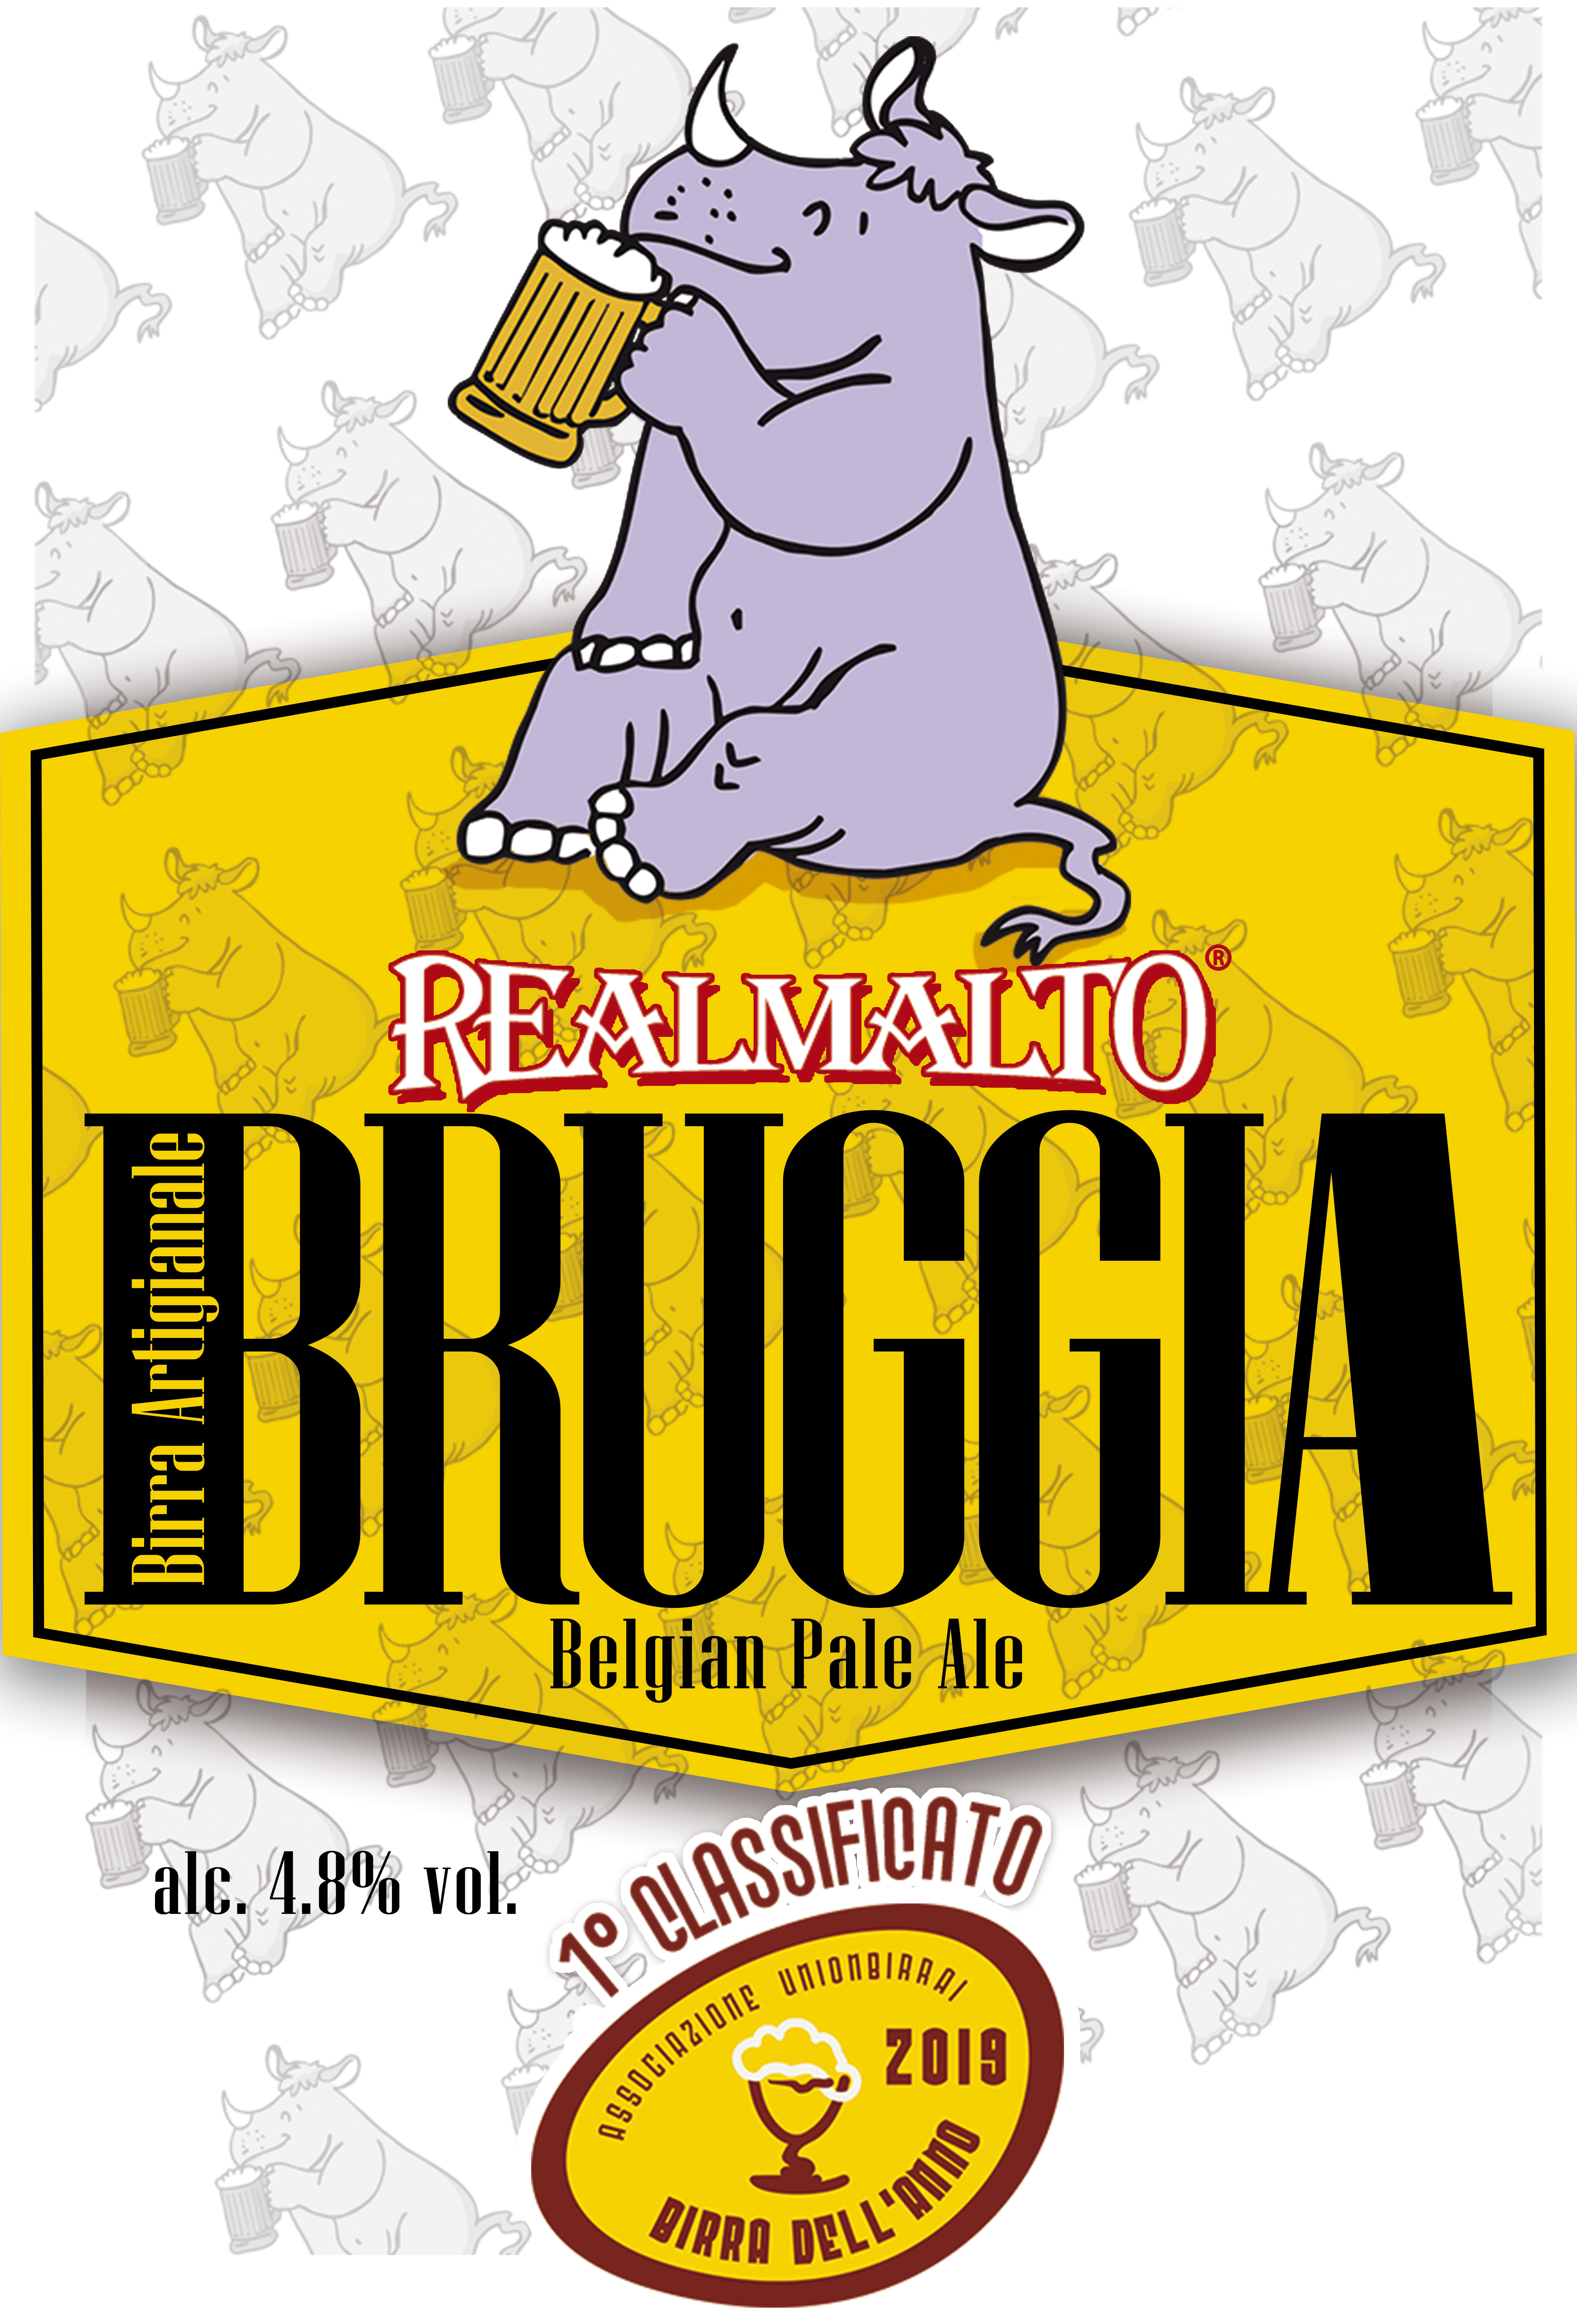 BRUGGIA Belgian Pale Ale 4,8% - 33 cl.